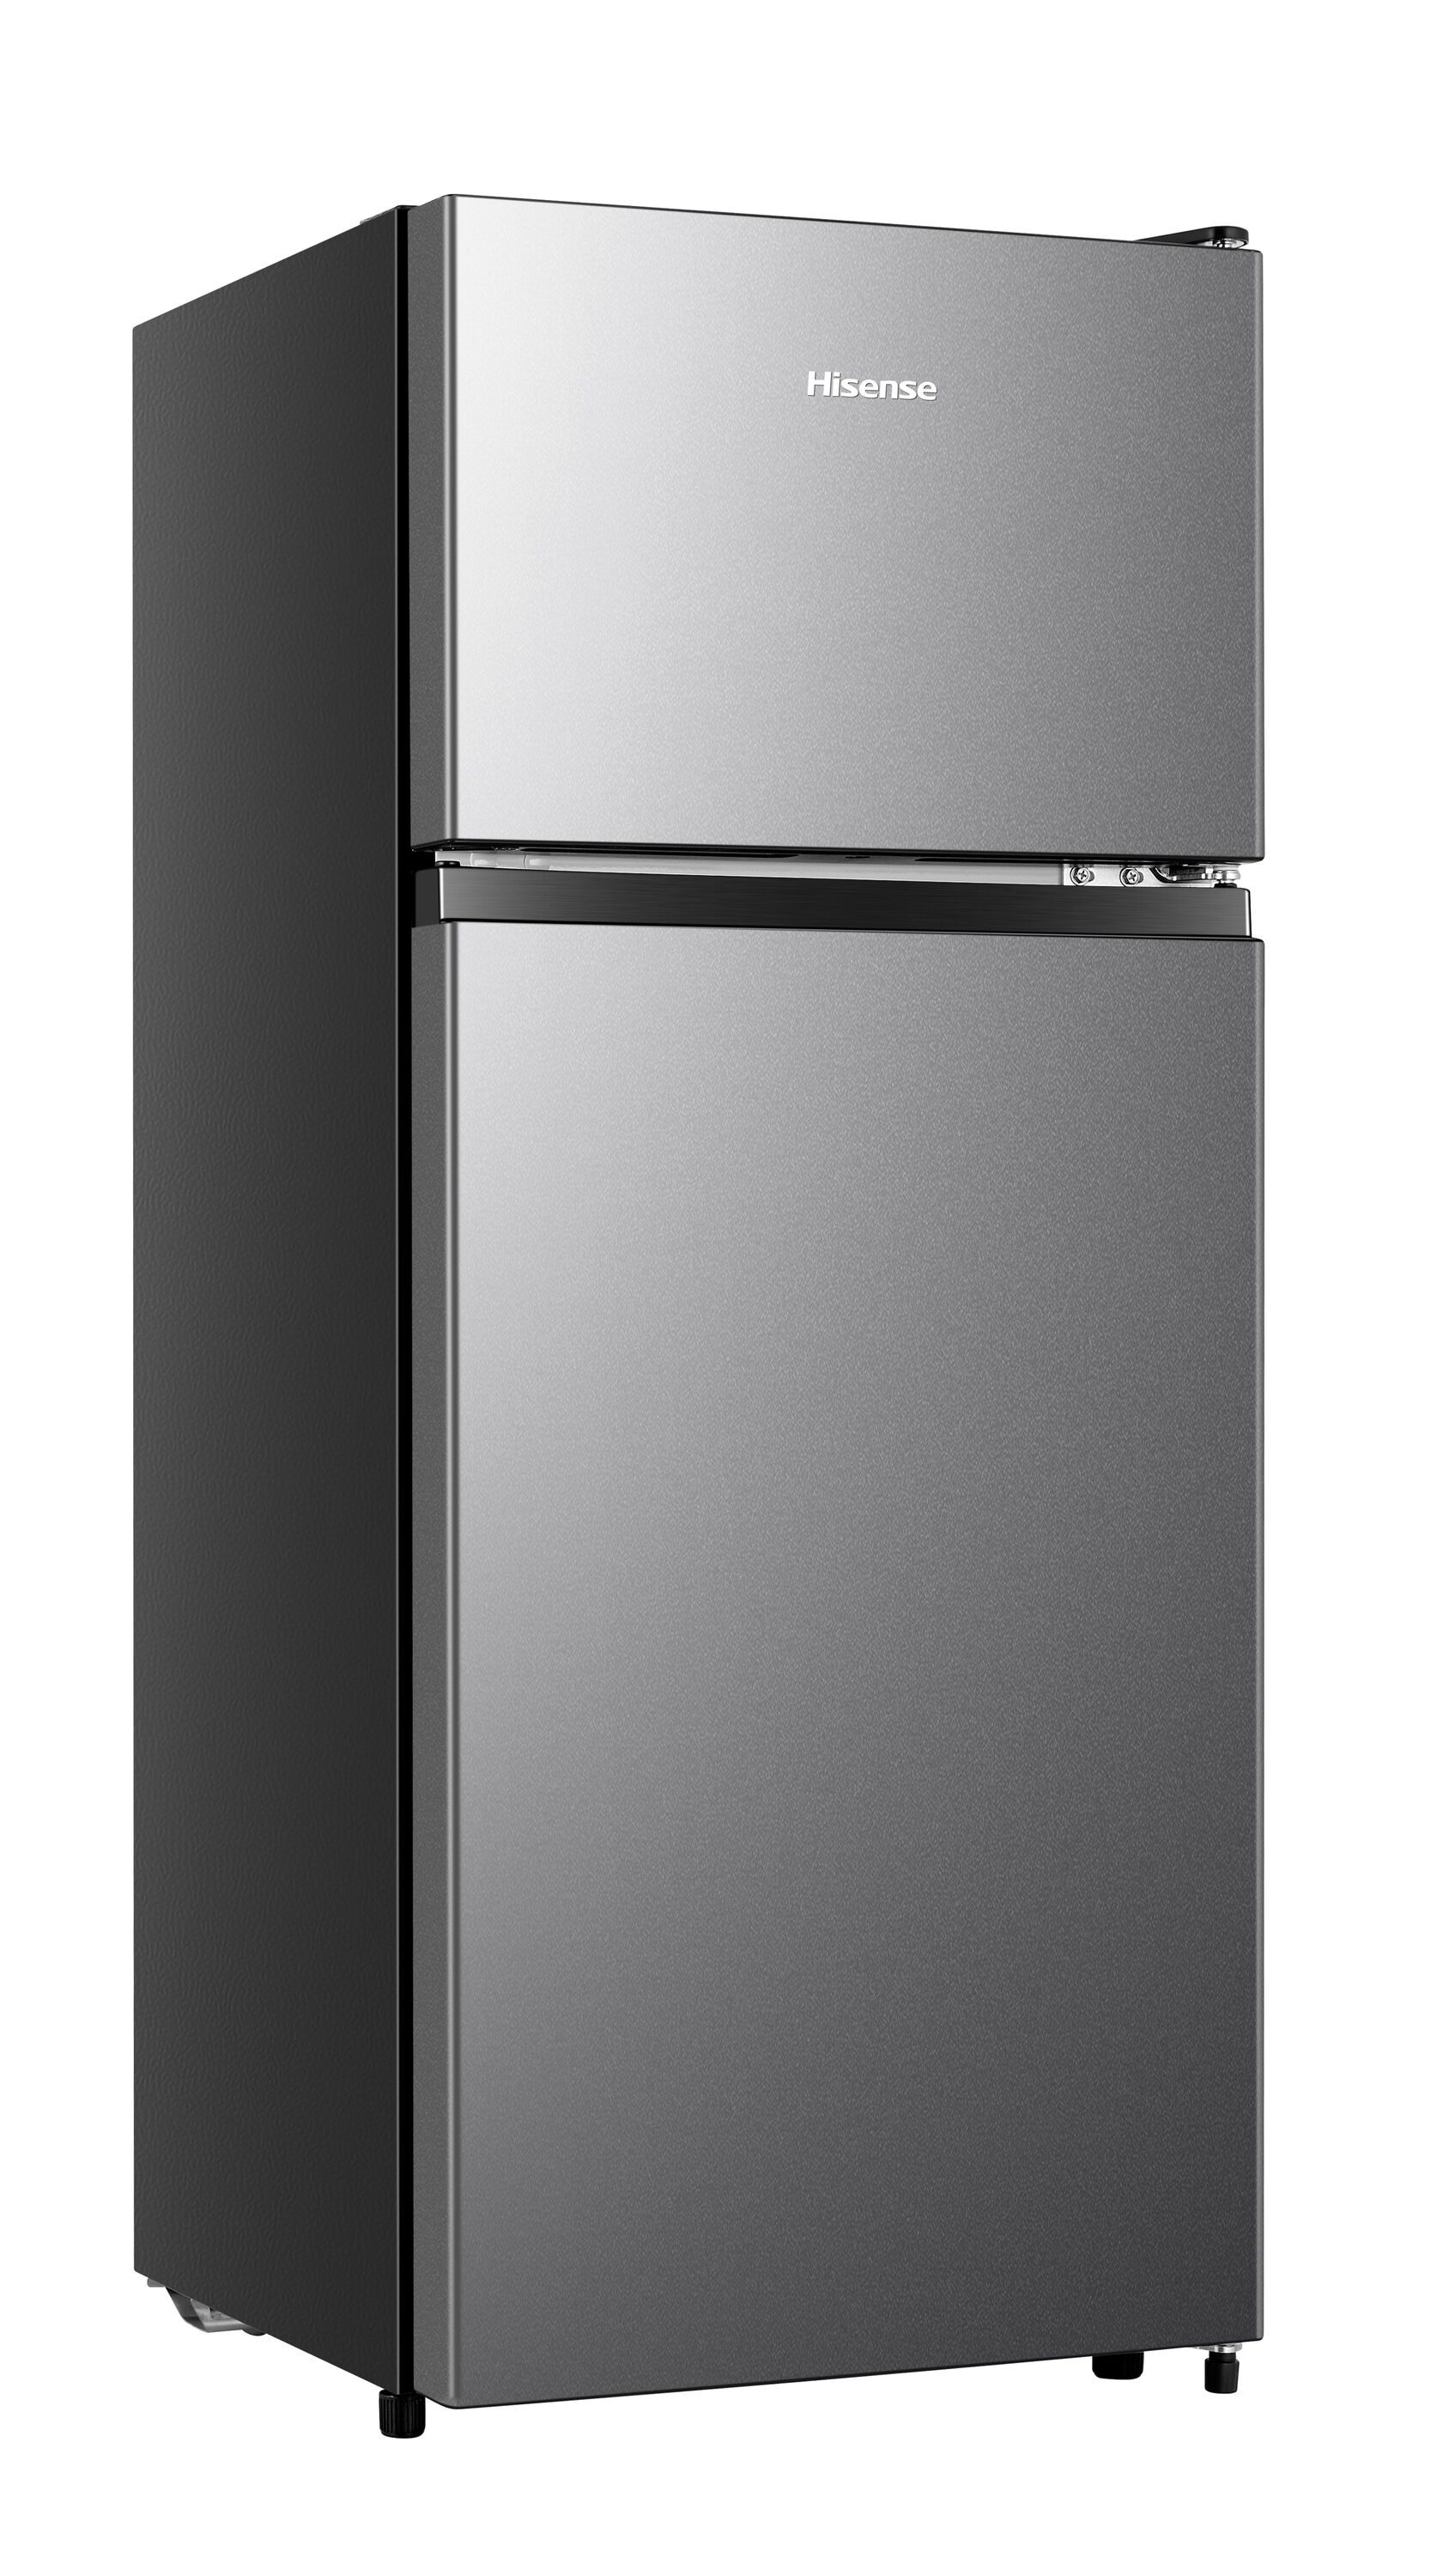 Eight Narrow, Counter-Depth Refrigerators